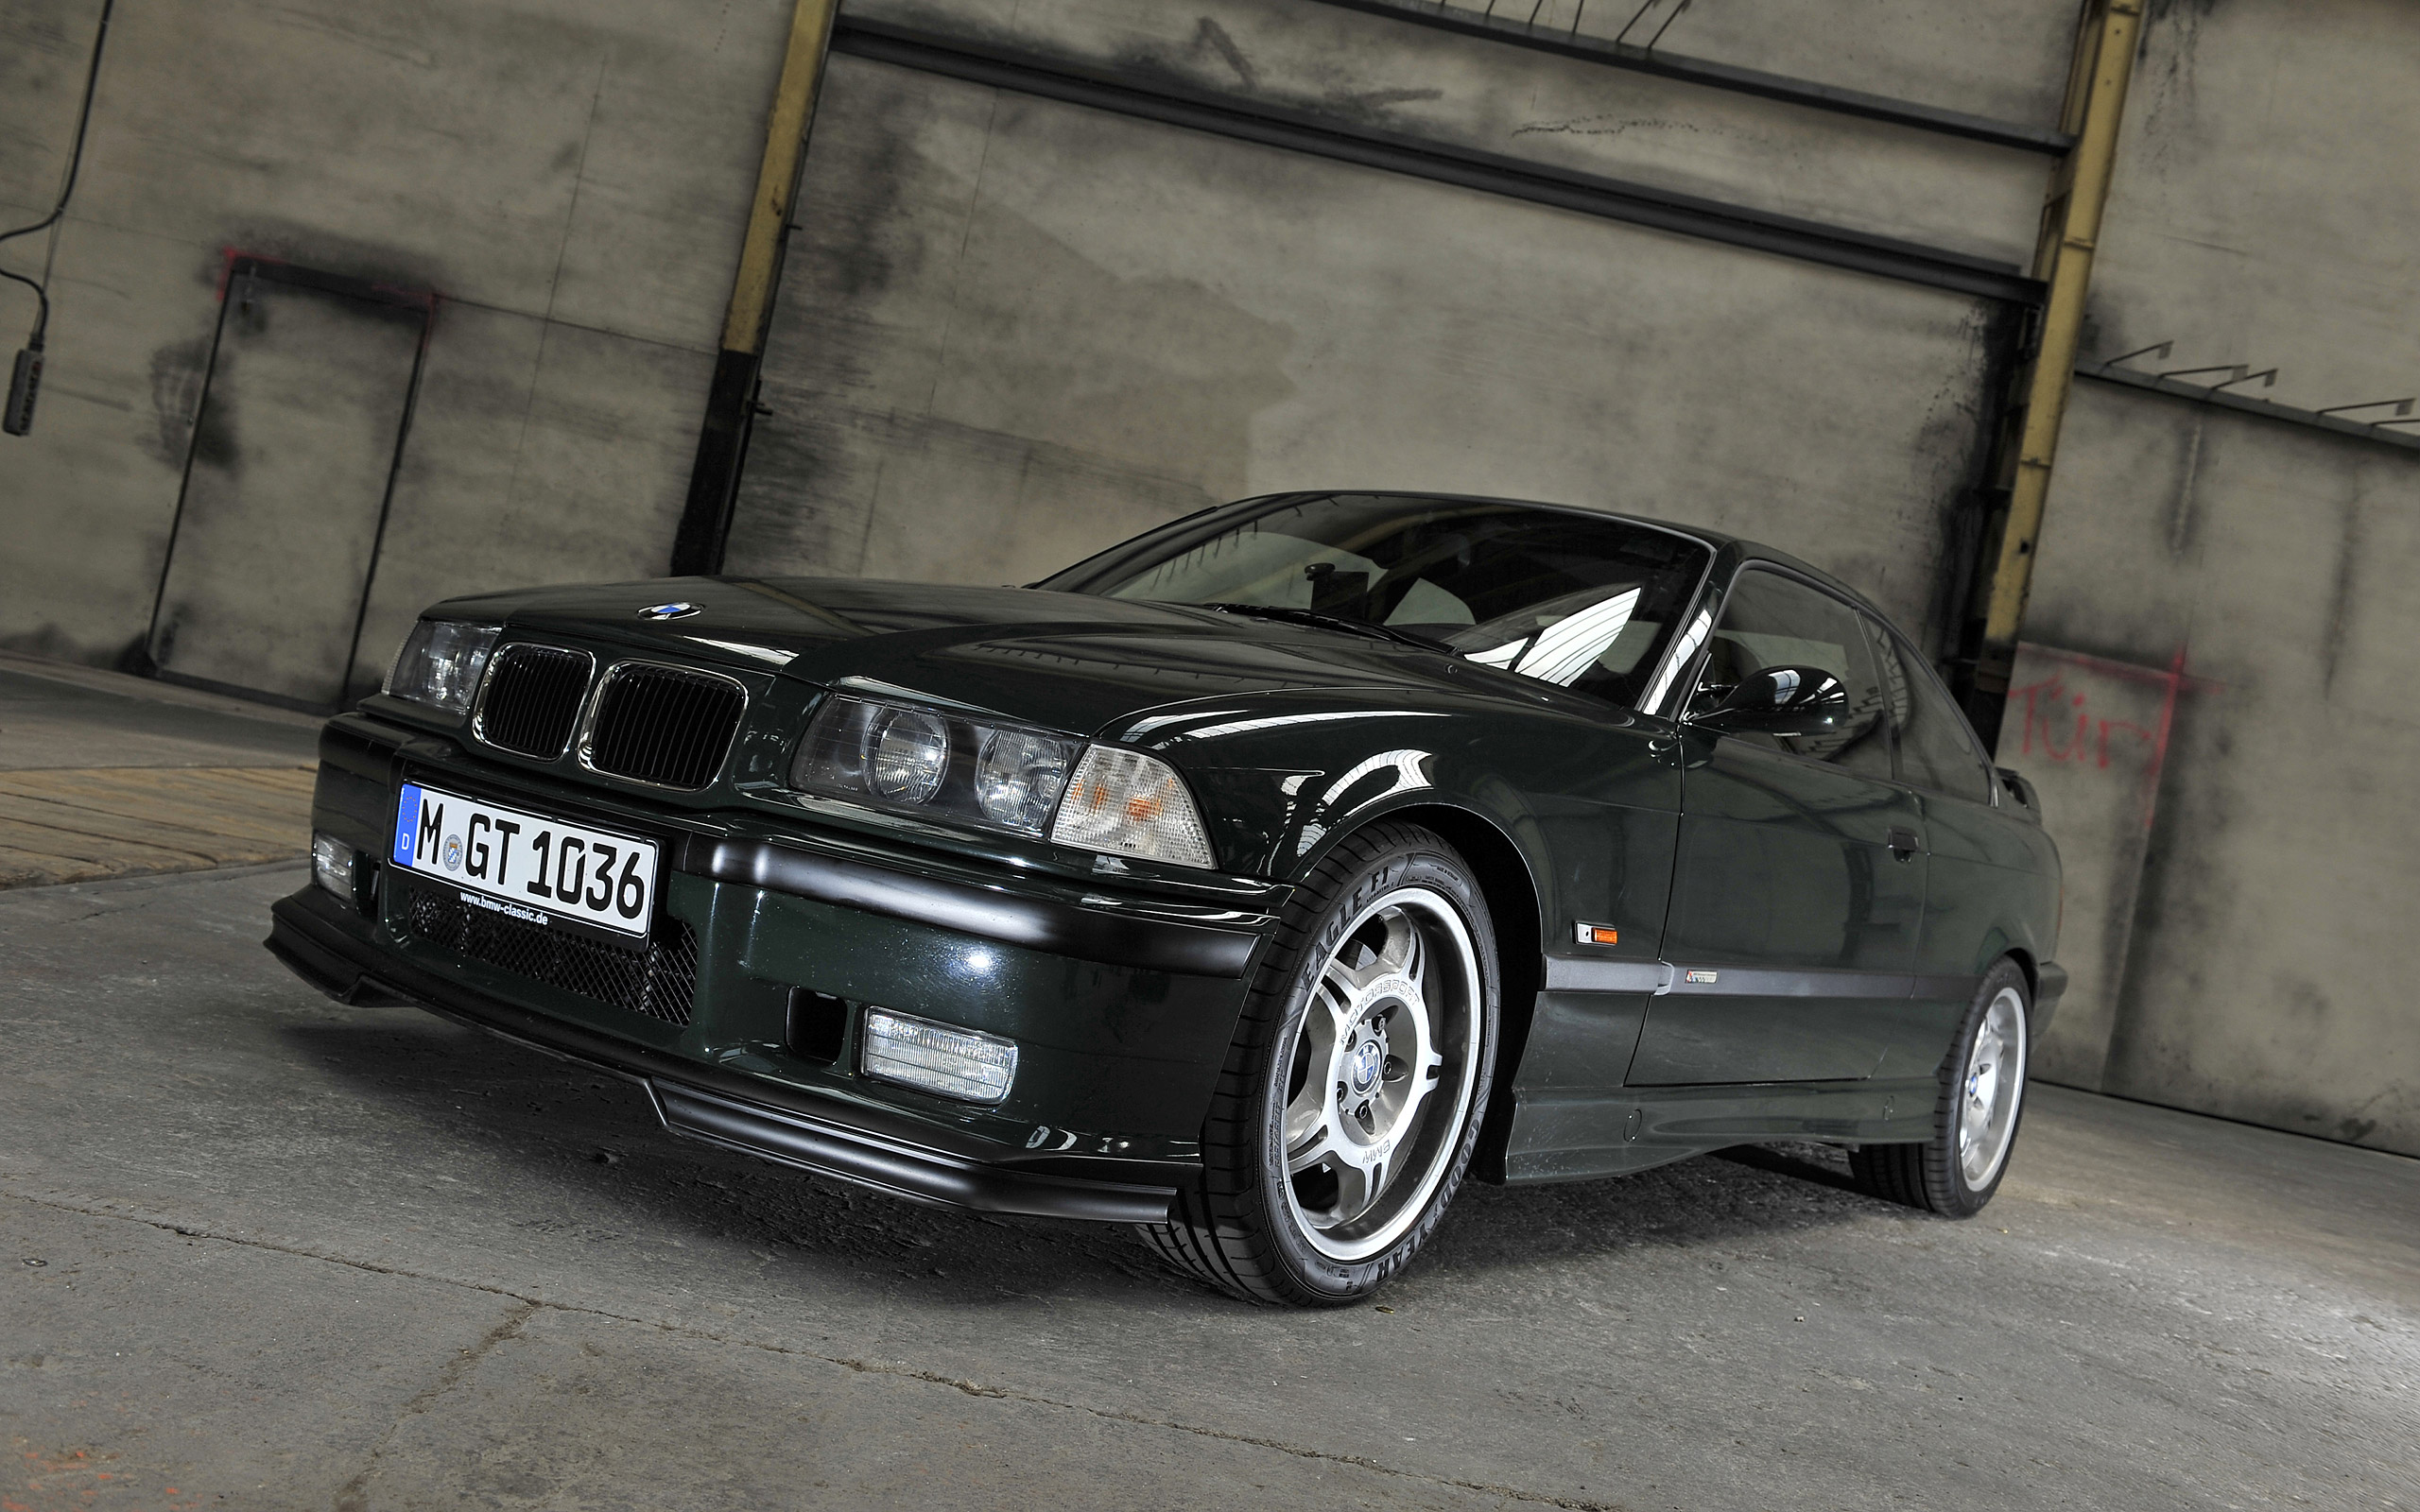  1995 BMW M3 GT Wallpaper.